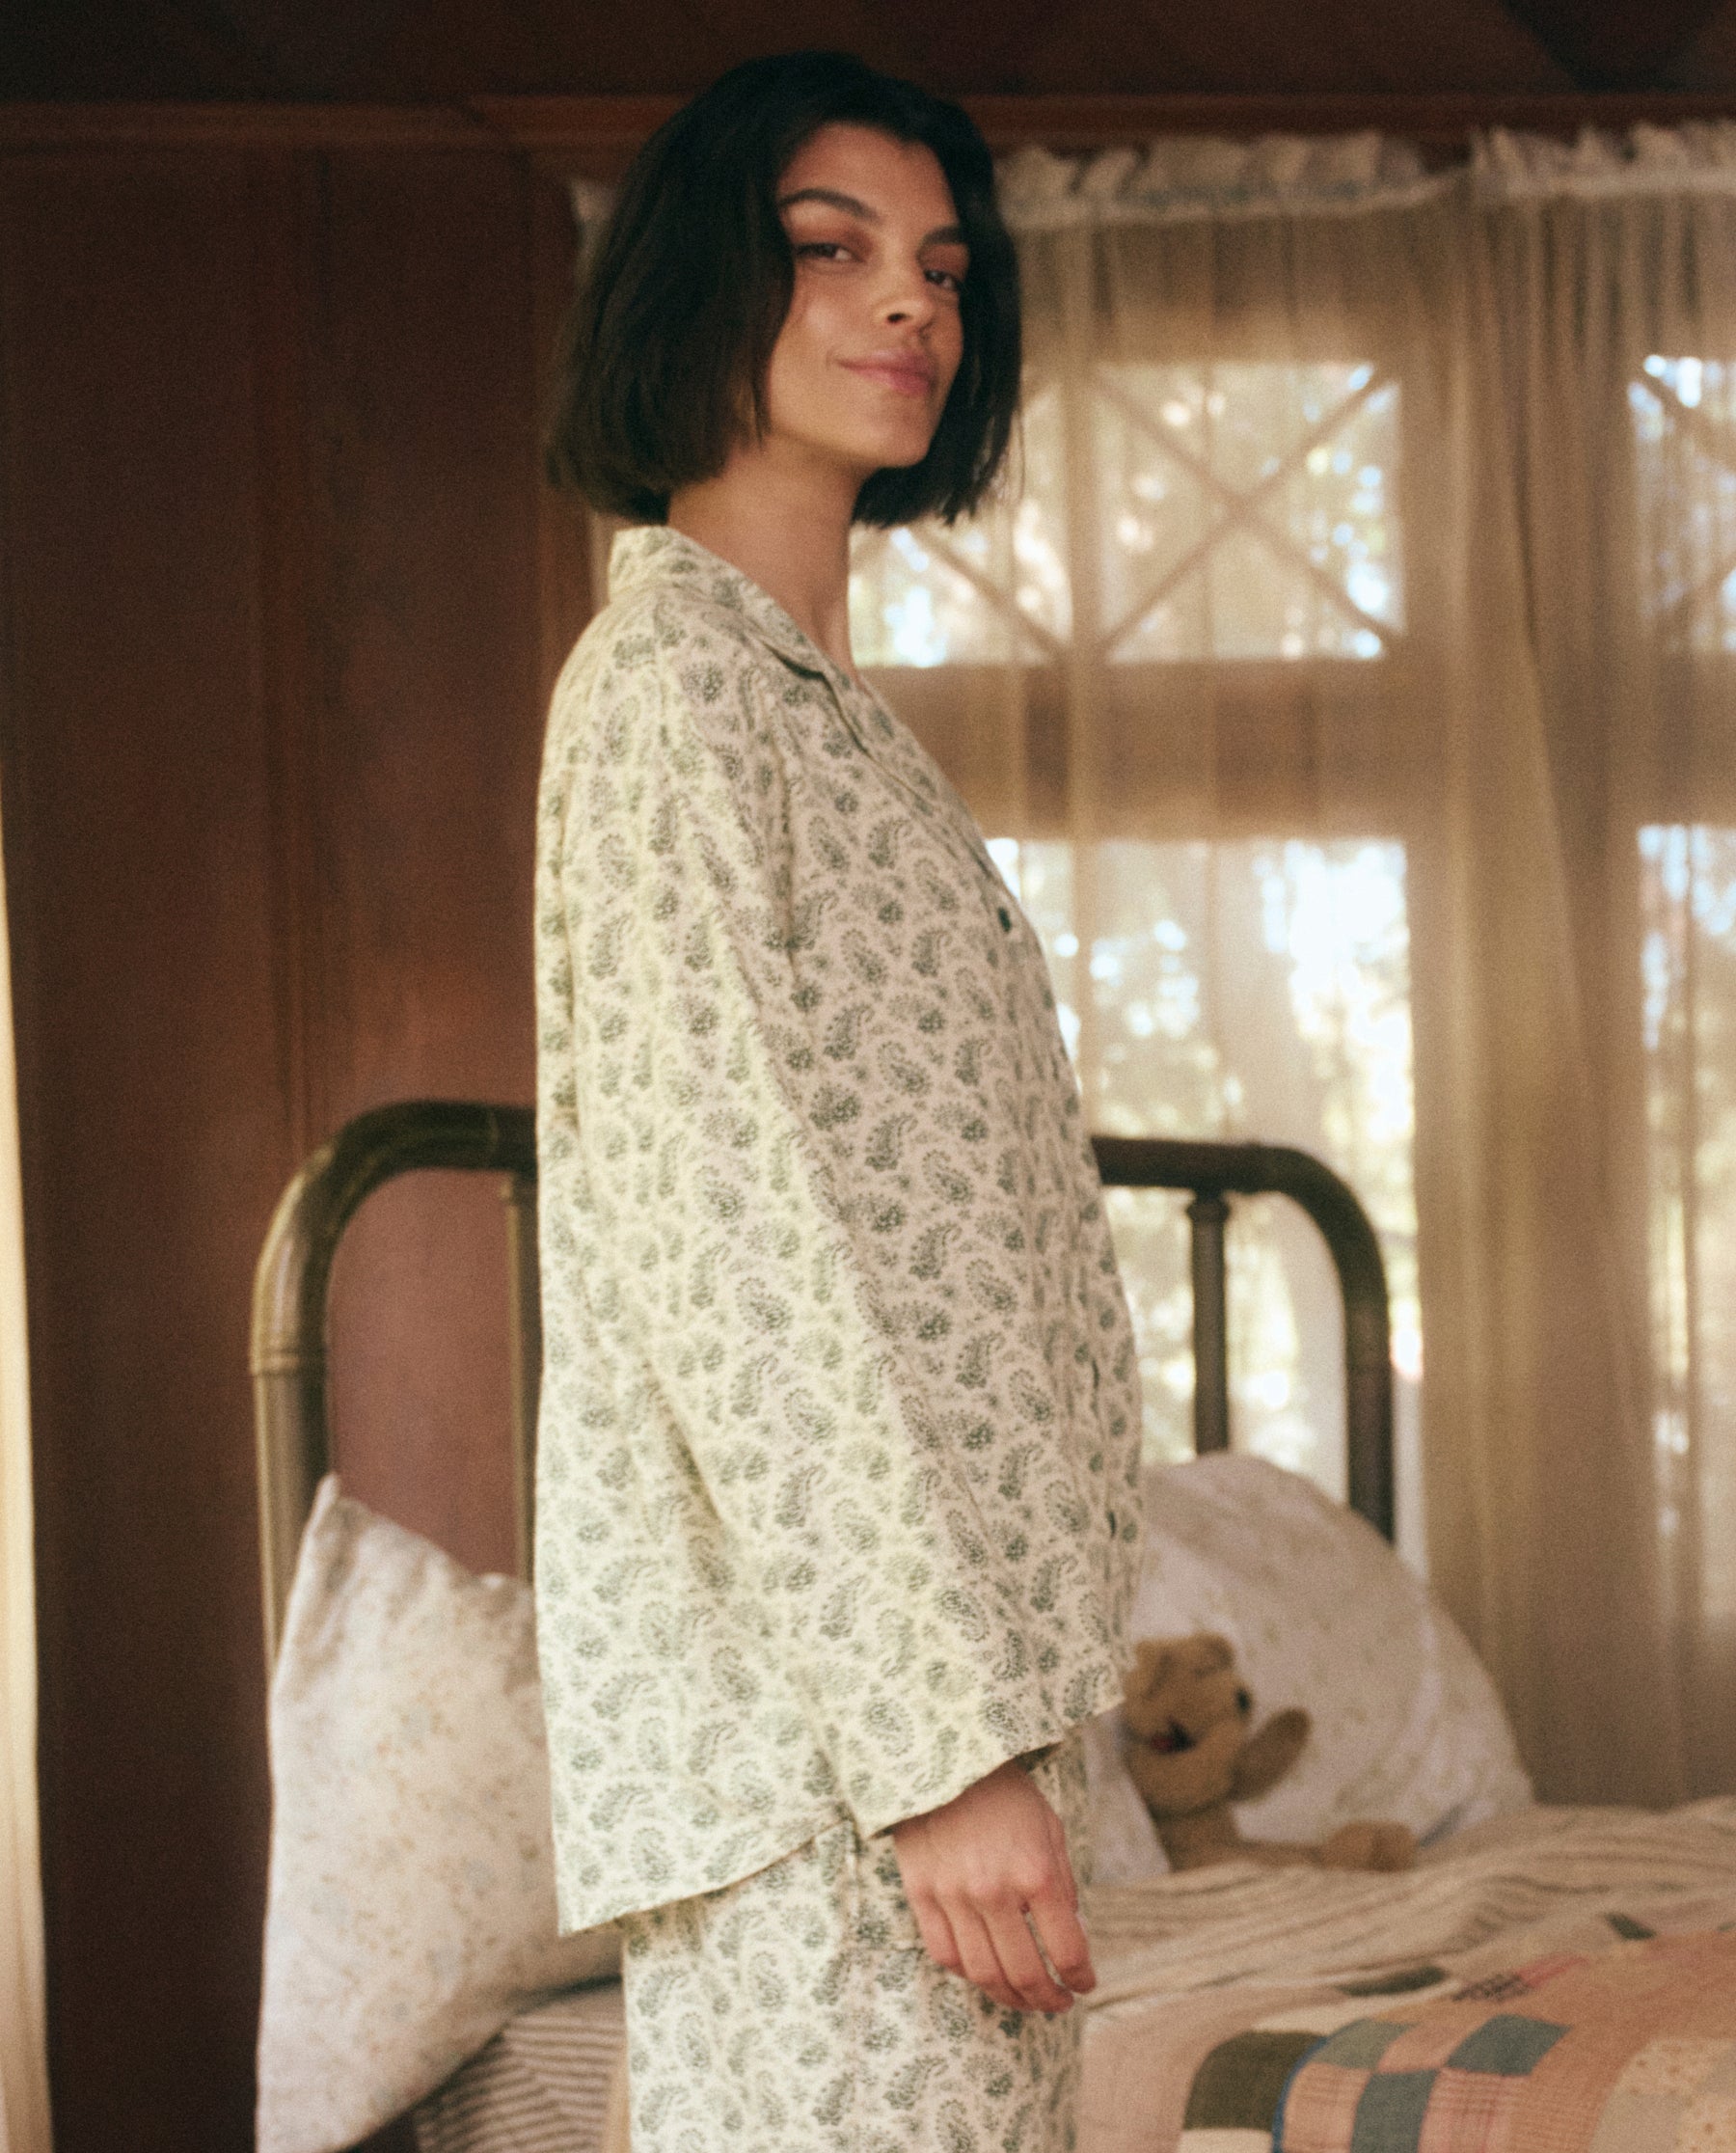 The Pajama Top. -- Washed White with Pine Vintage Paisley SLEEP TOP THE GREAT. HOL 23 SLEEP SALE